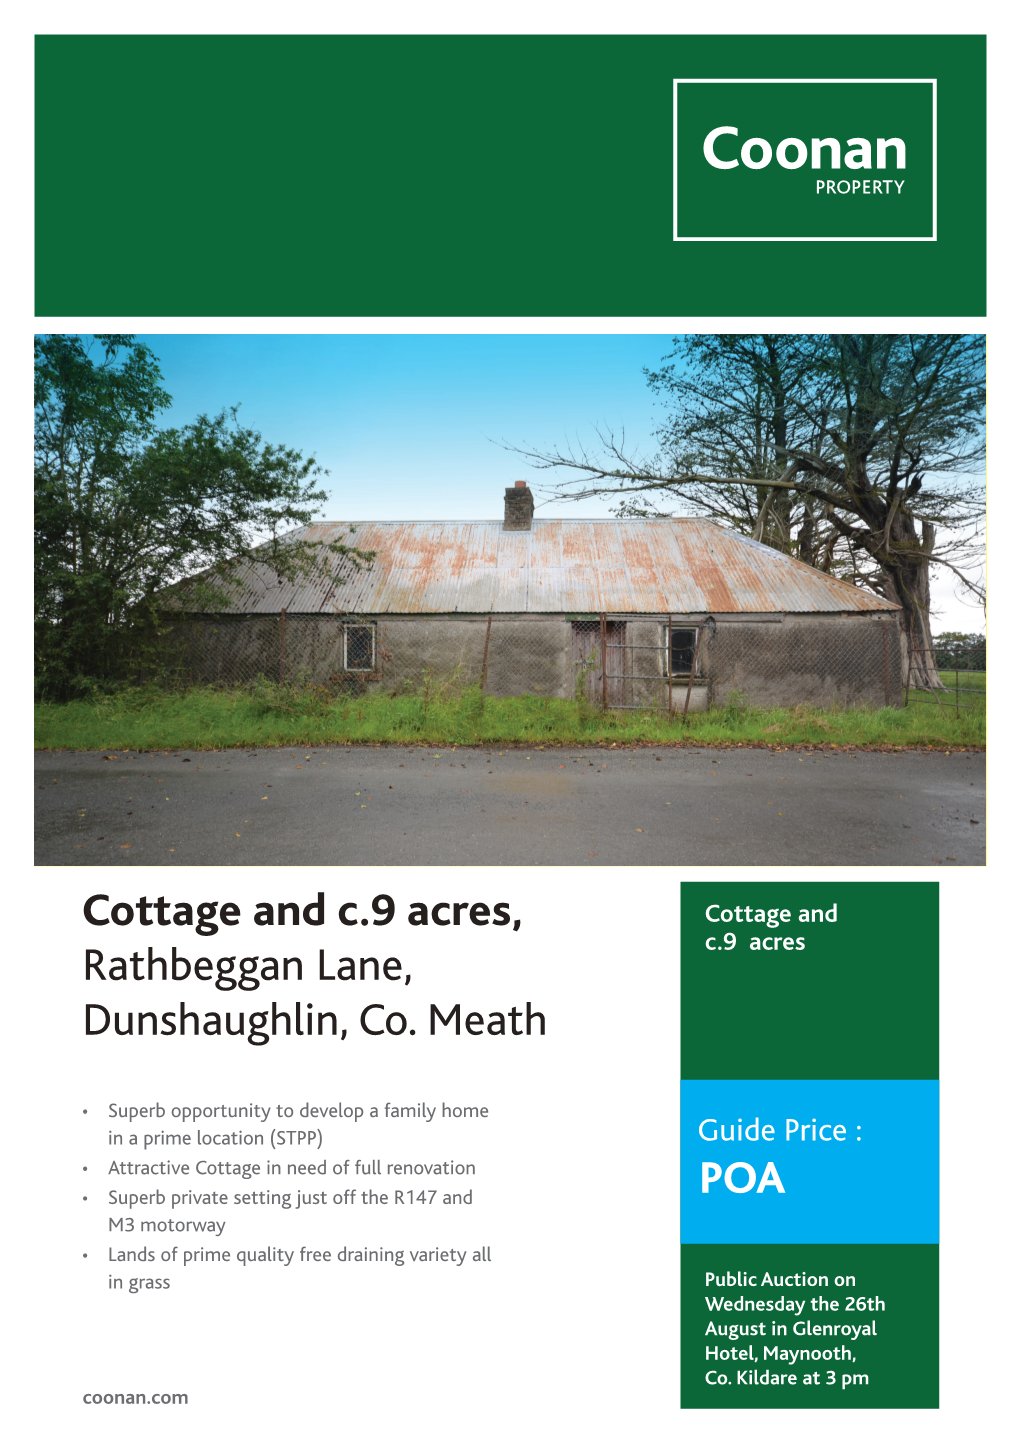 Cottage and C.9 Acres, Rathbeggan Lane, Dunshaughlin, Co. Meath